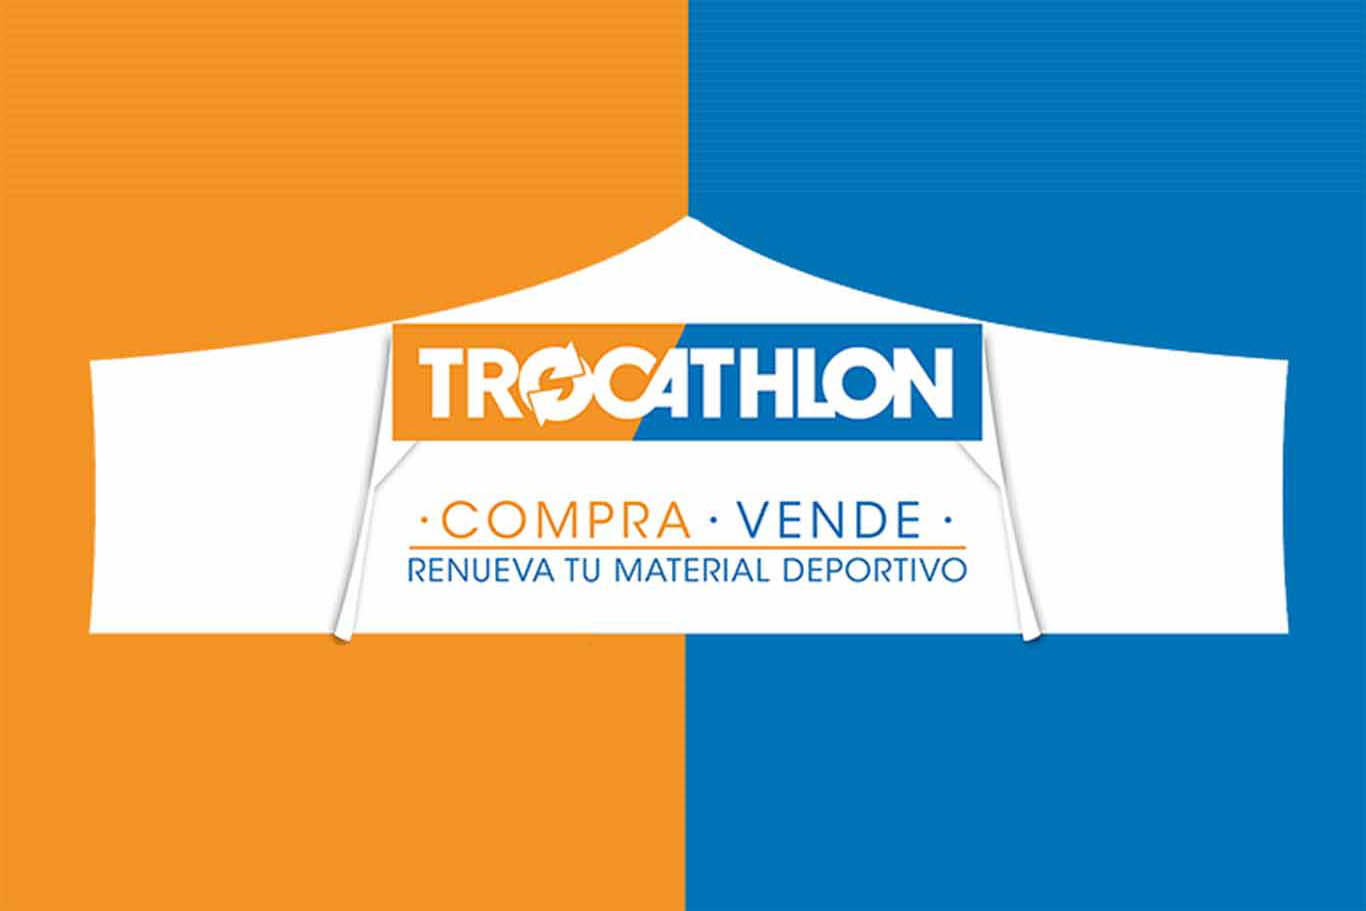 trocathlon decathlon 2018